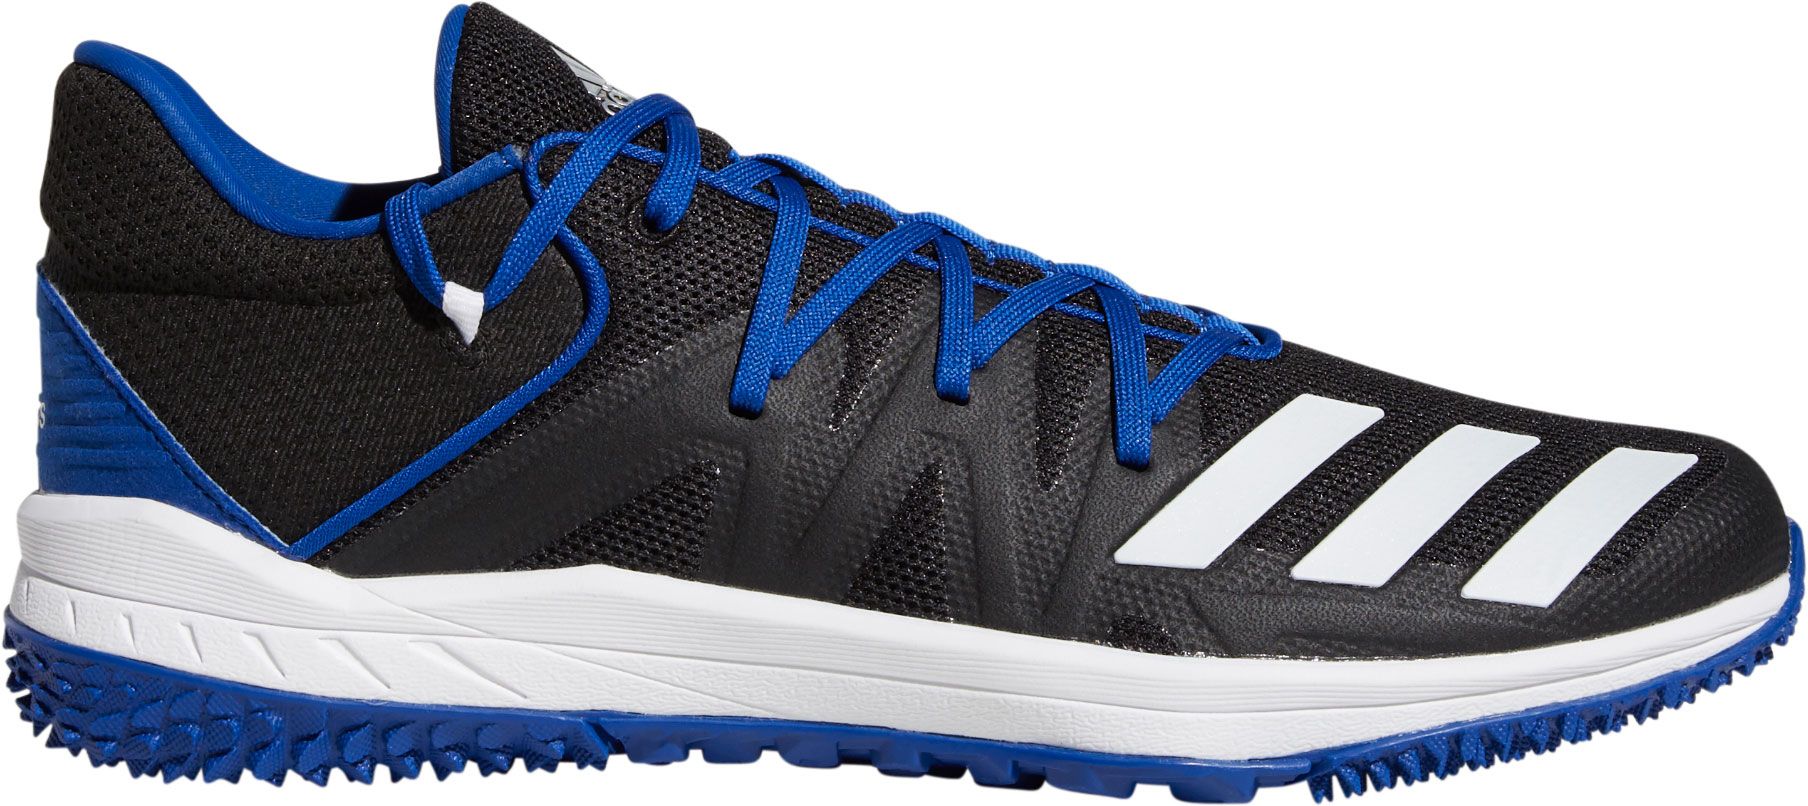 adidas men's speed turf baseball shoes